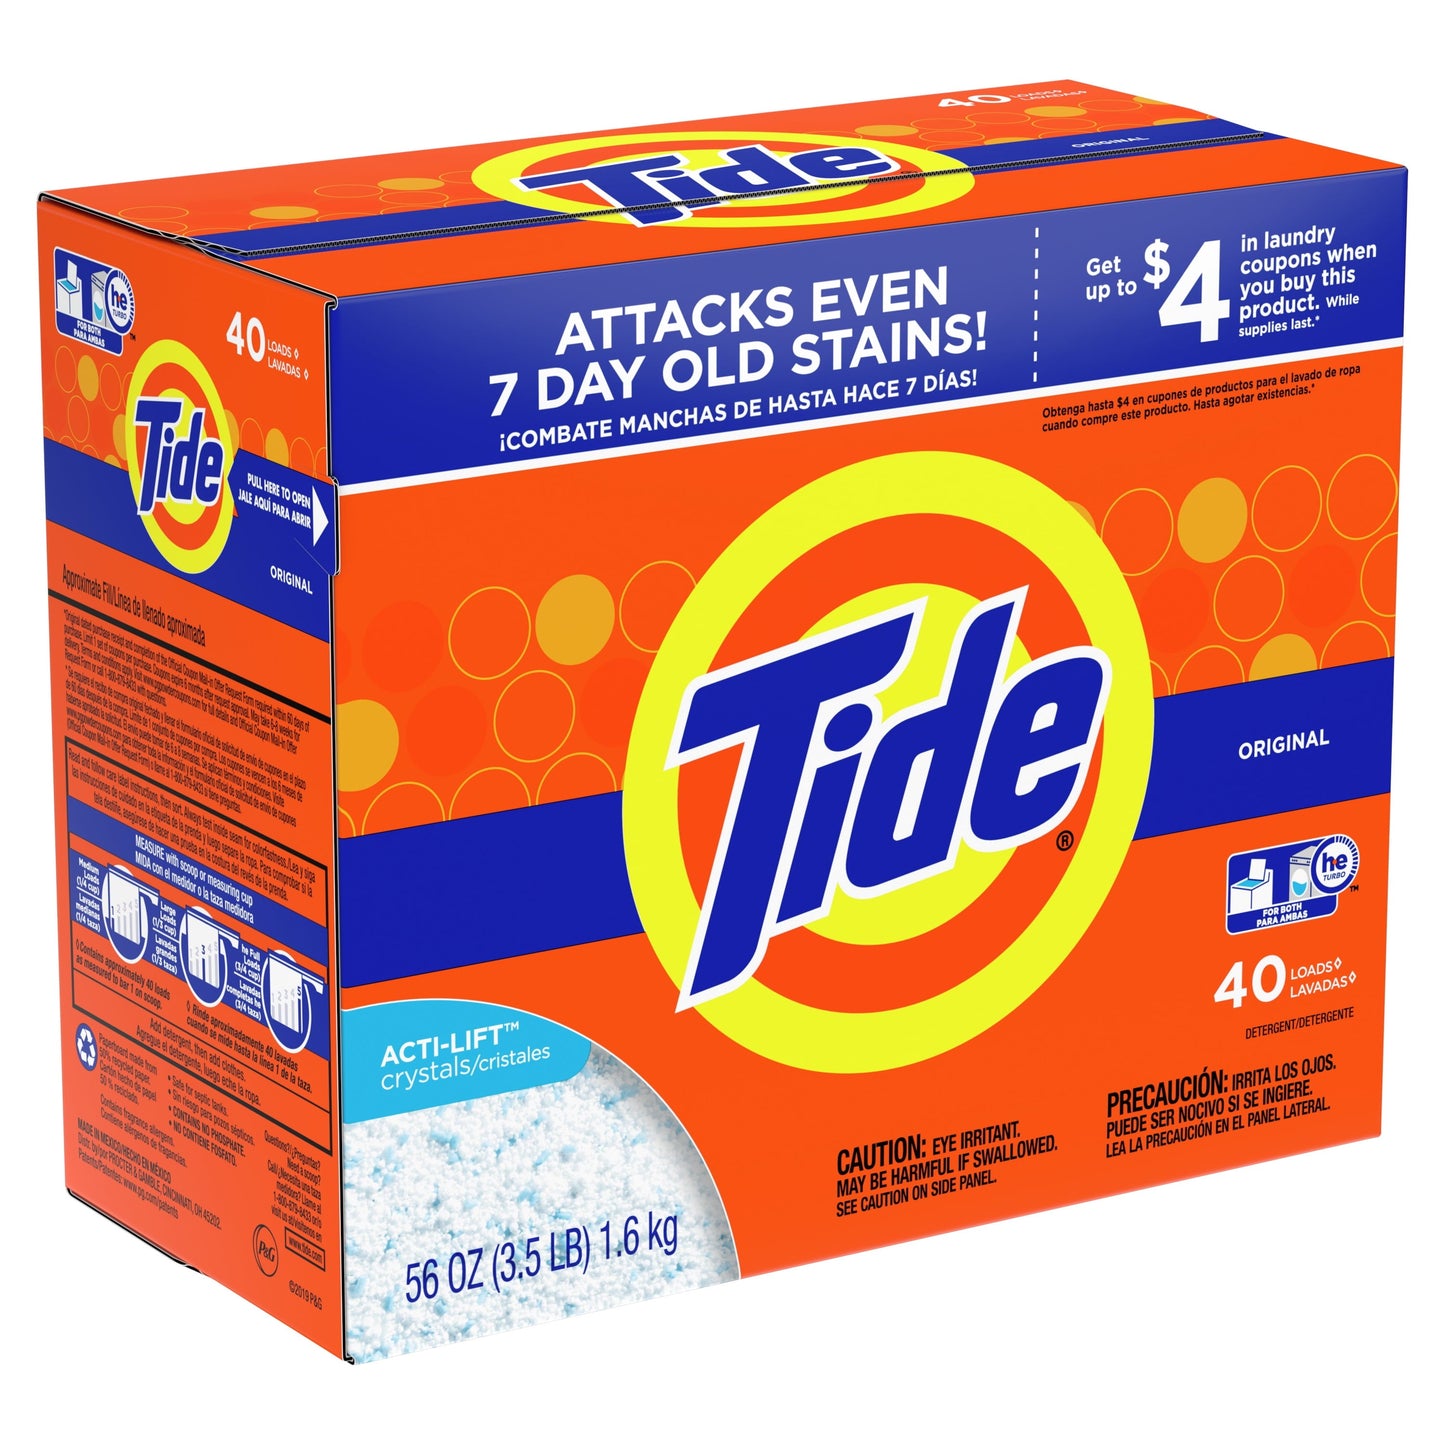 Tide Original Scent, 40 Loads Powder Laundry Detergent, 56 oz